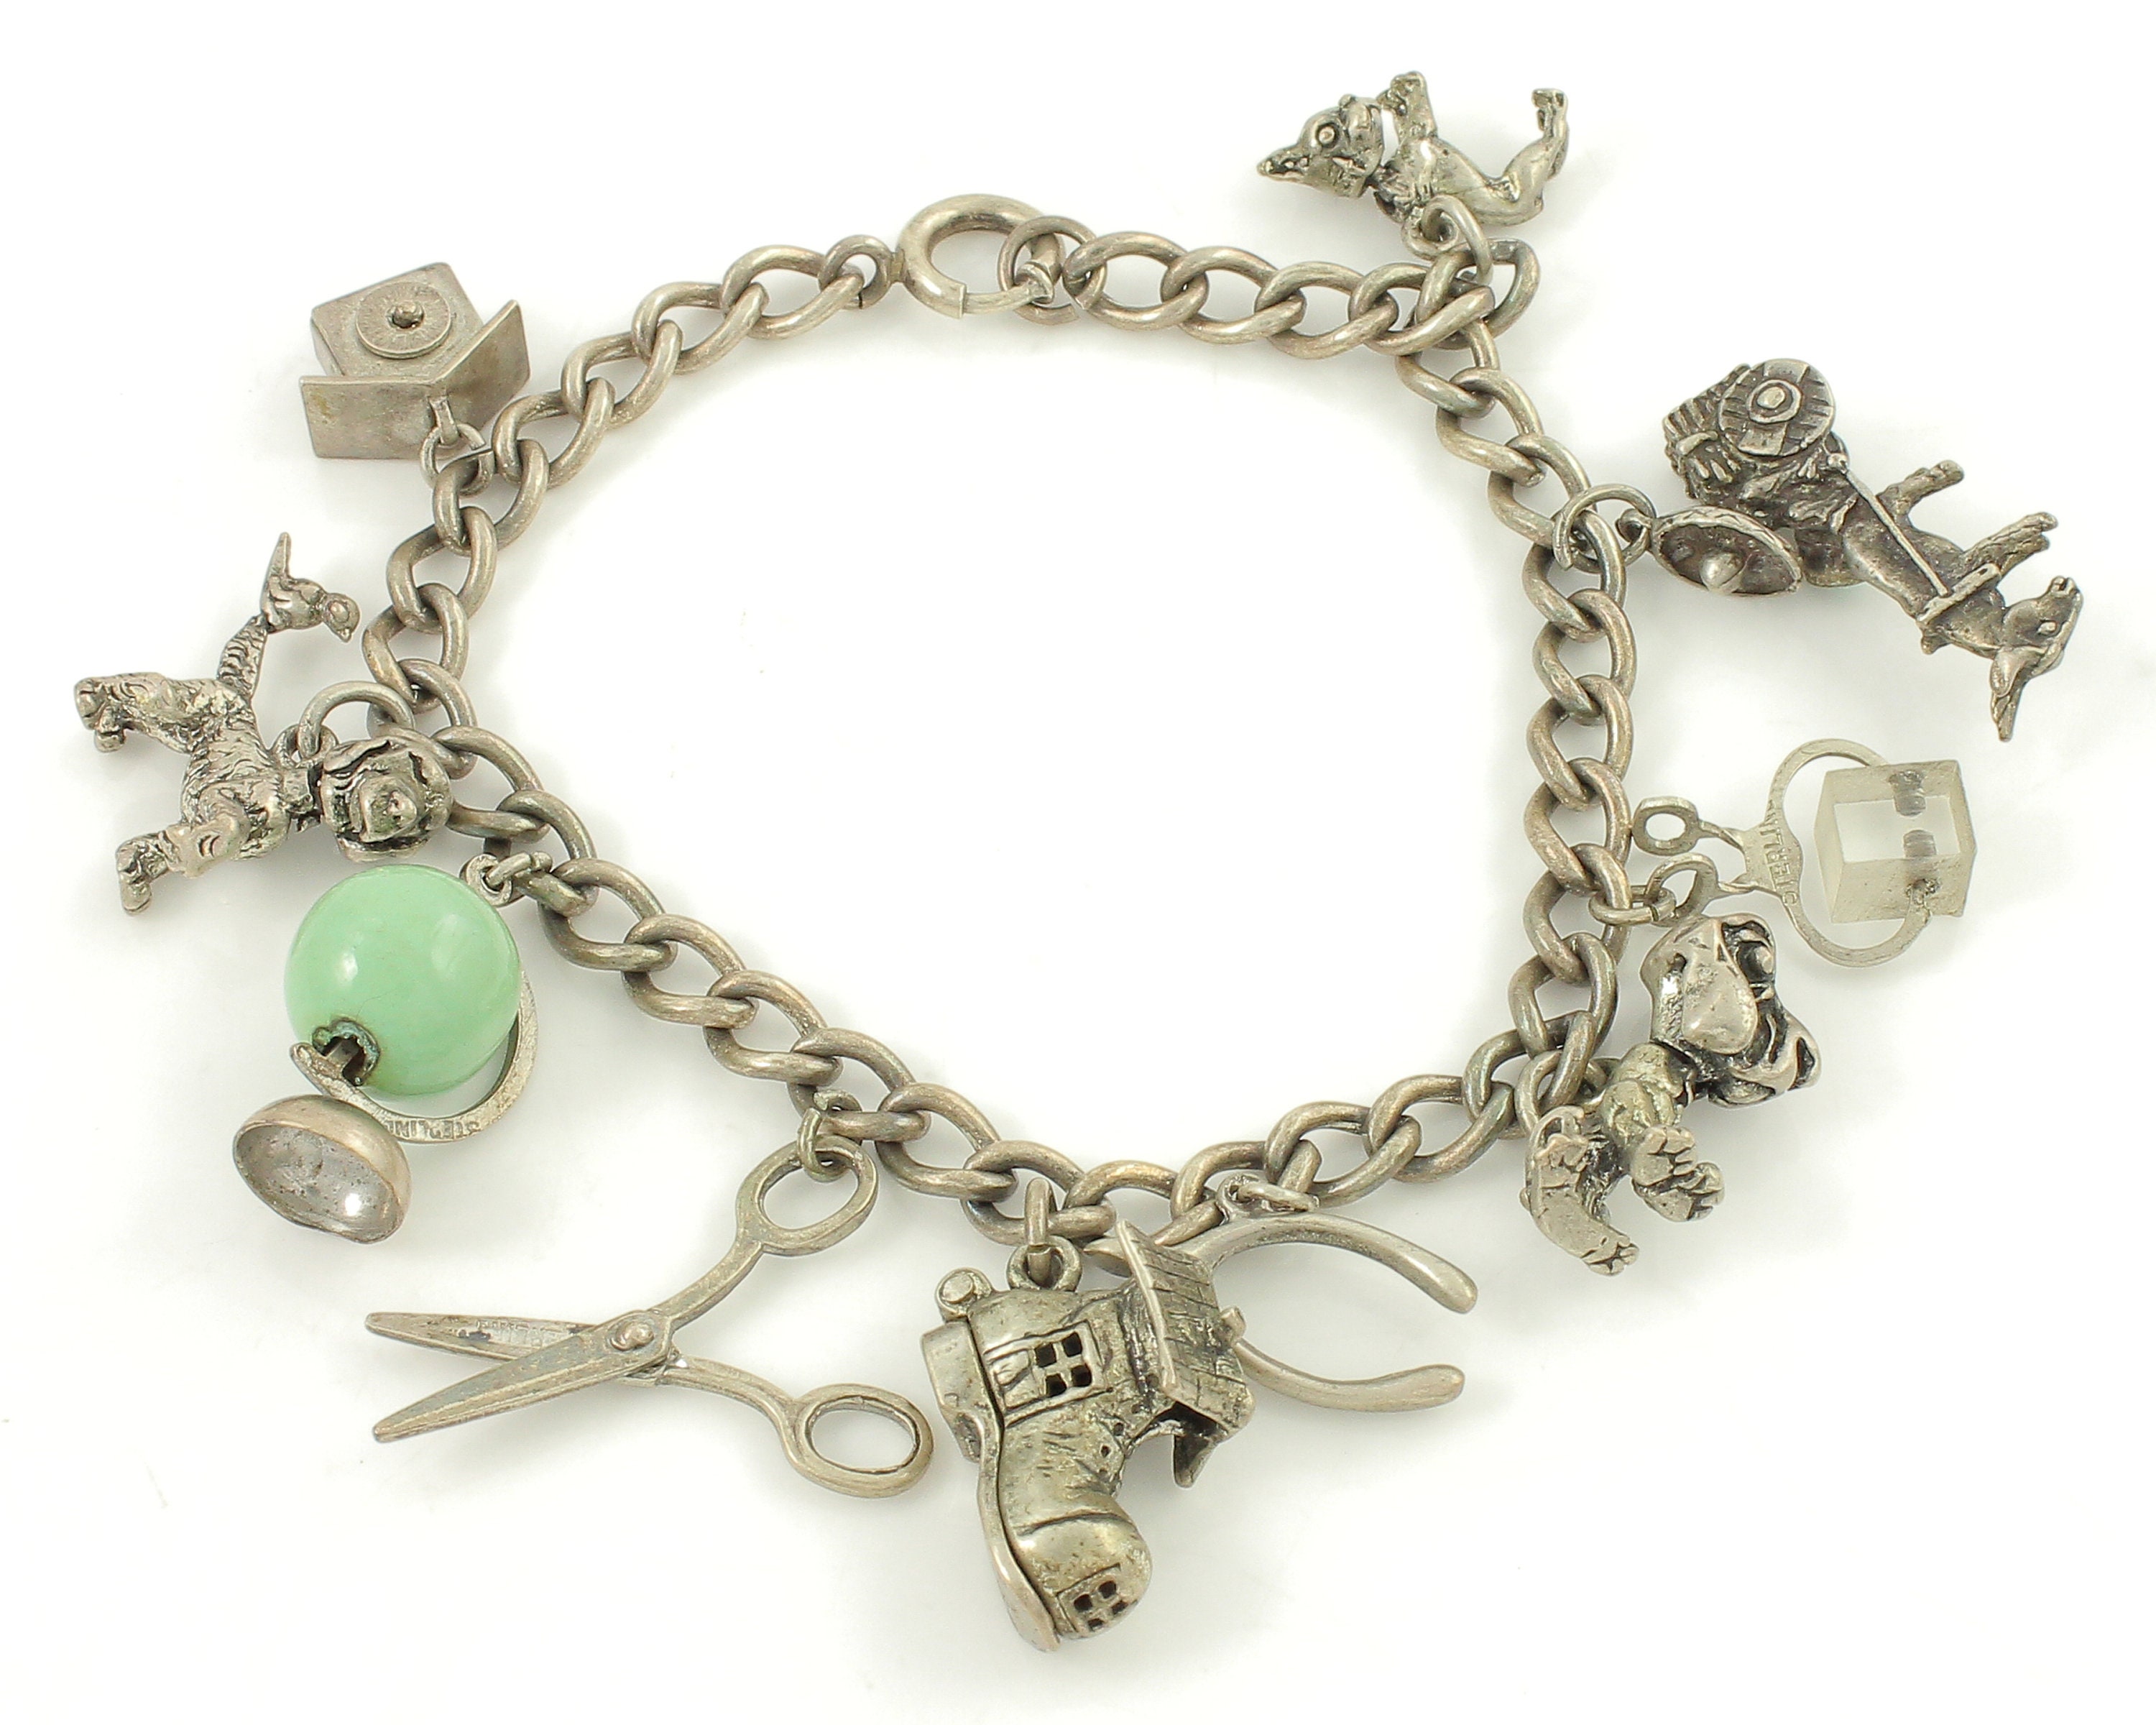 Silver Mexican charm bracelet 1930s